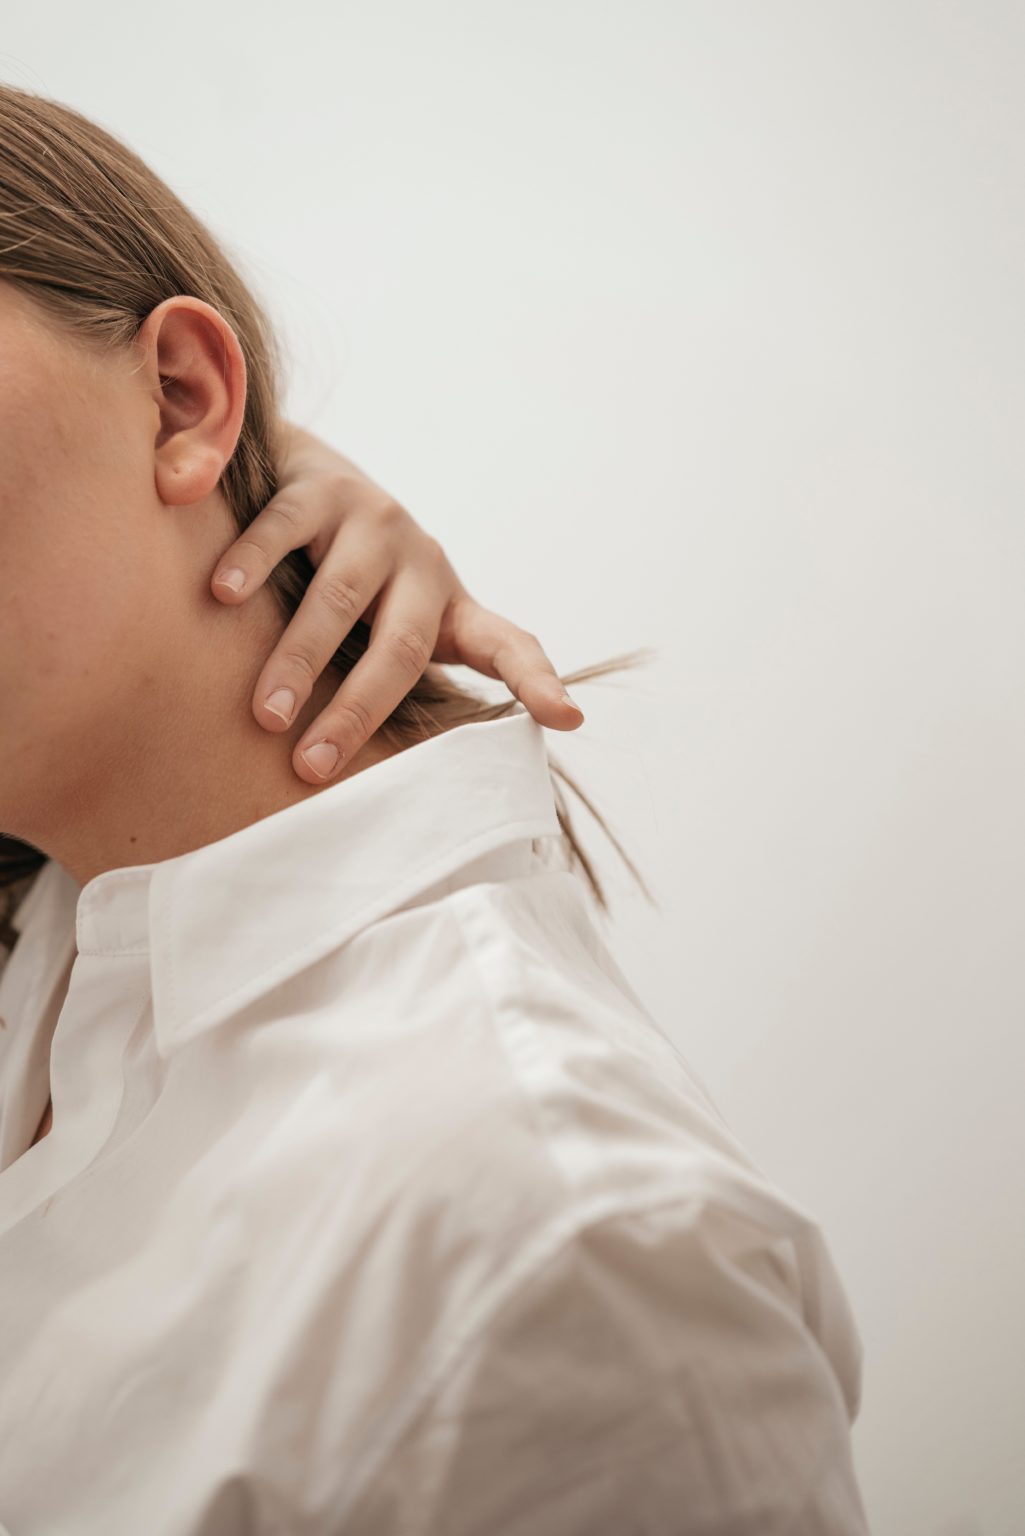 neck pain relief in ottawa